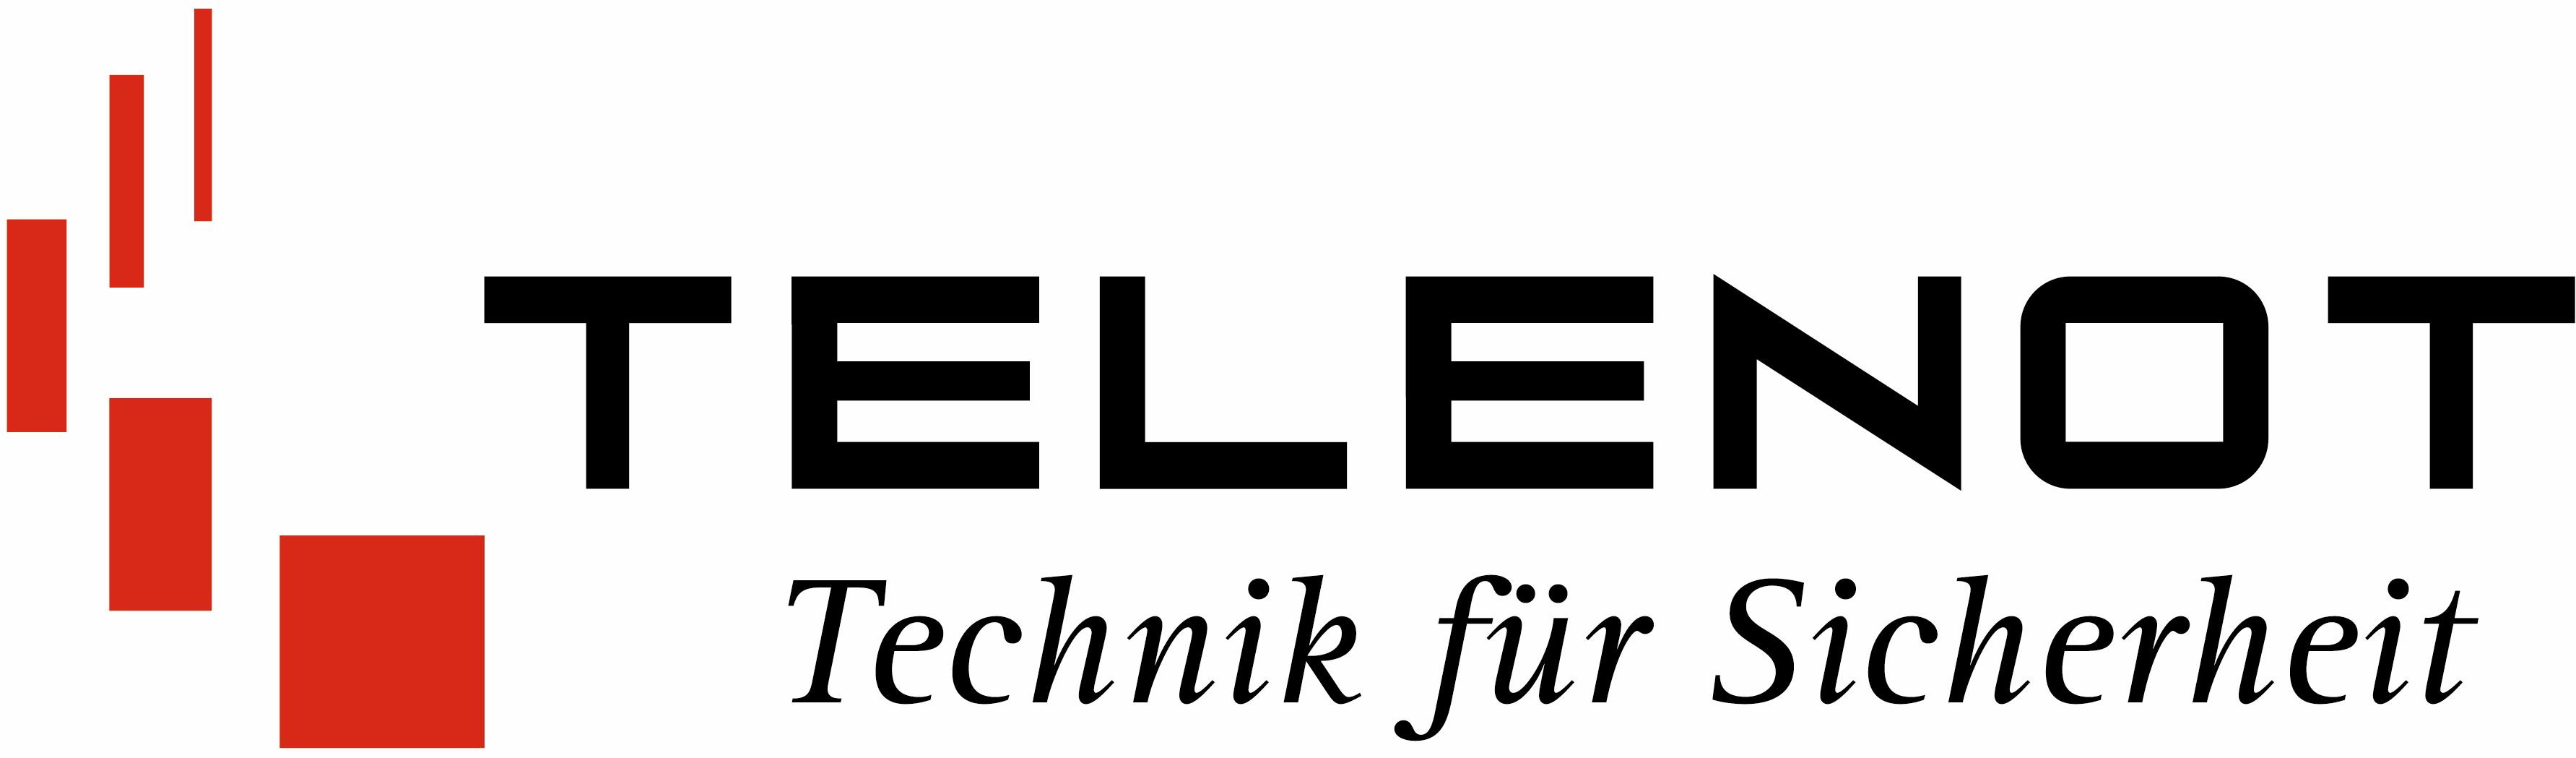 Telenity Logo photo - 1